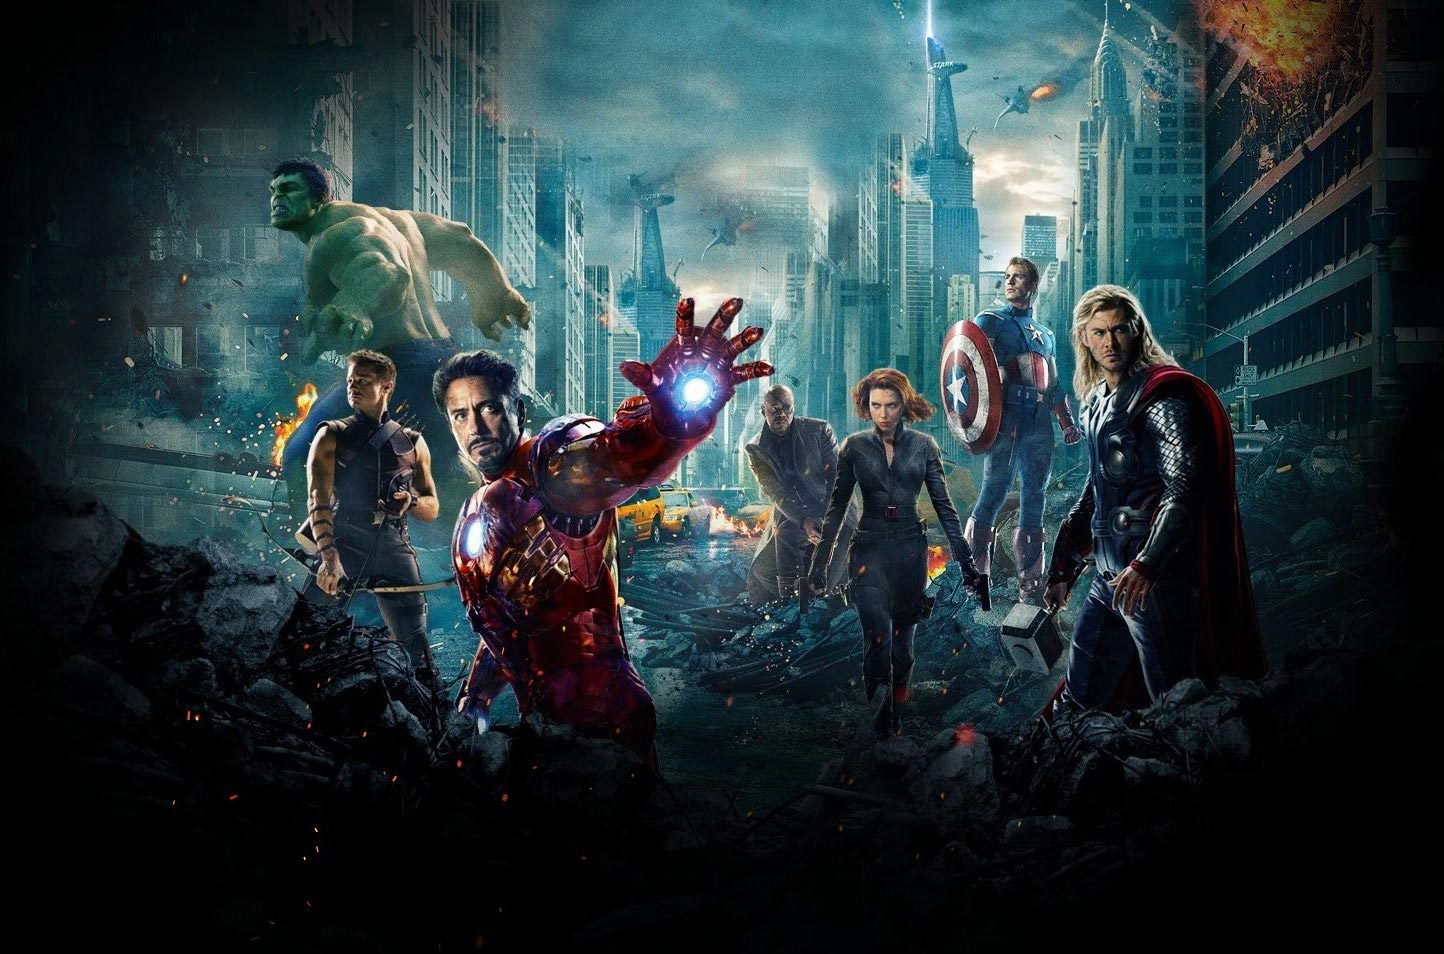 http://www.filmofilia.com/wp-content/uploads/2012/02/The_Avengers.jpg